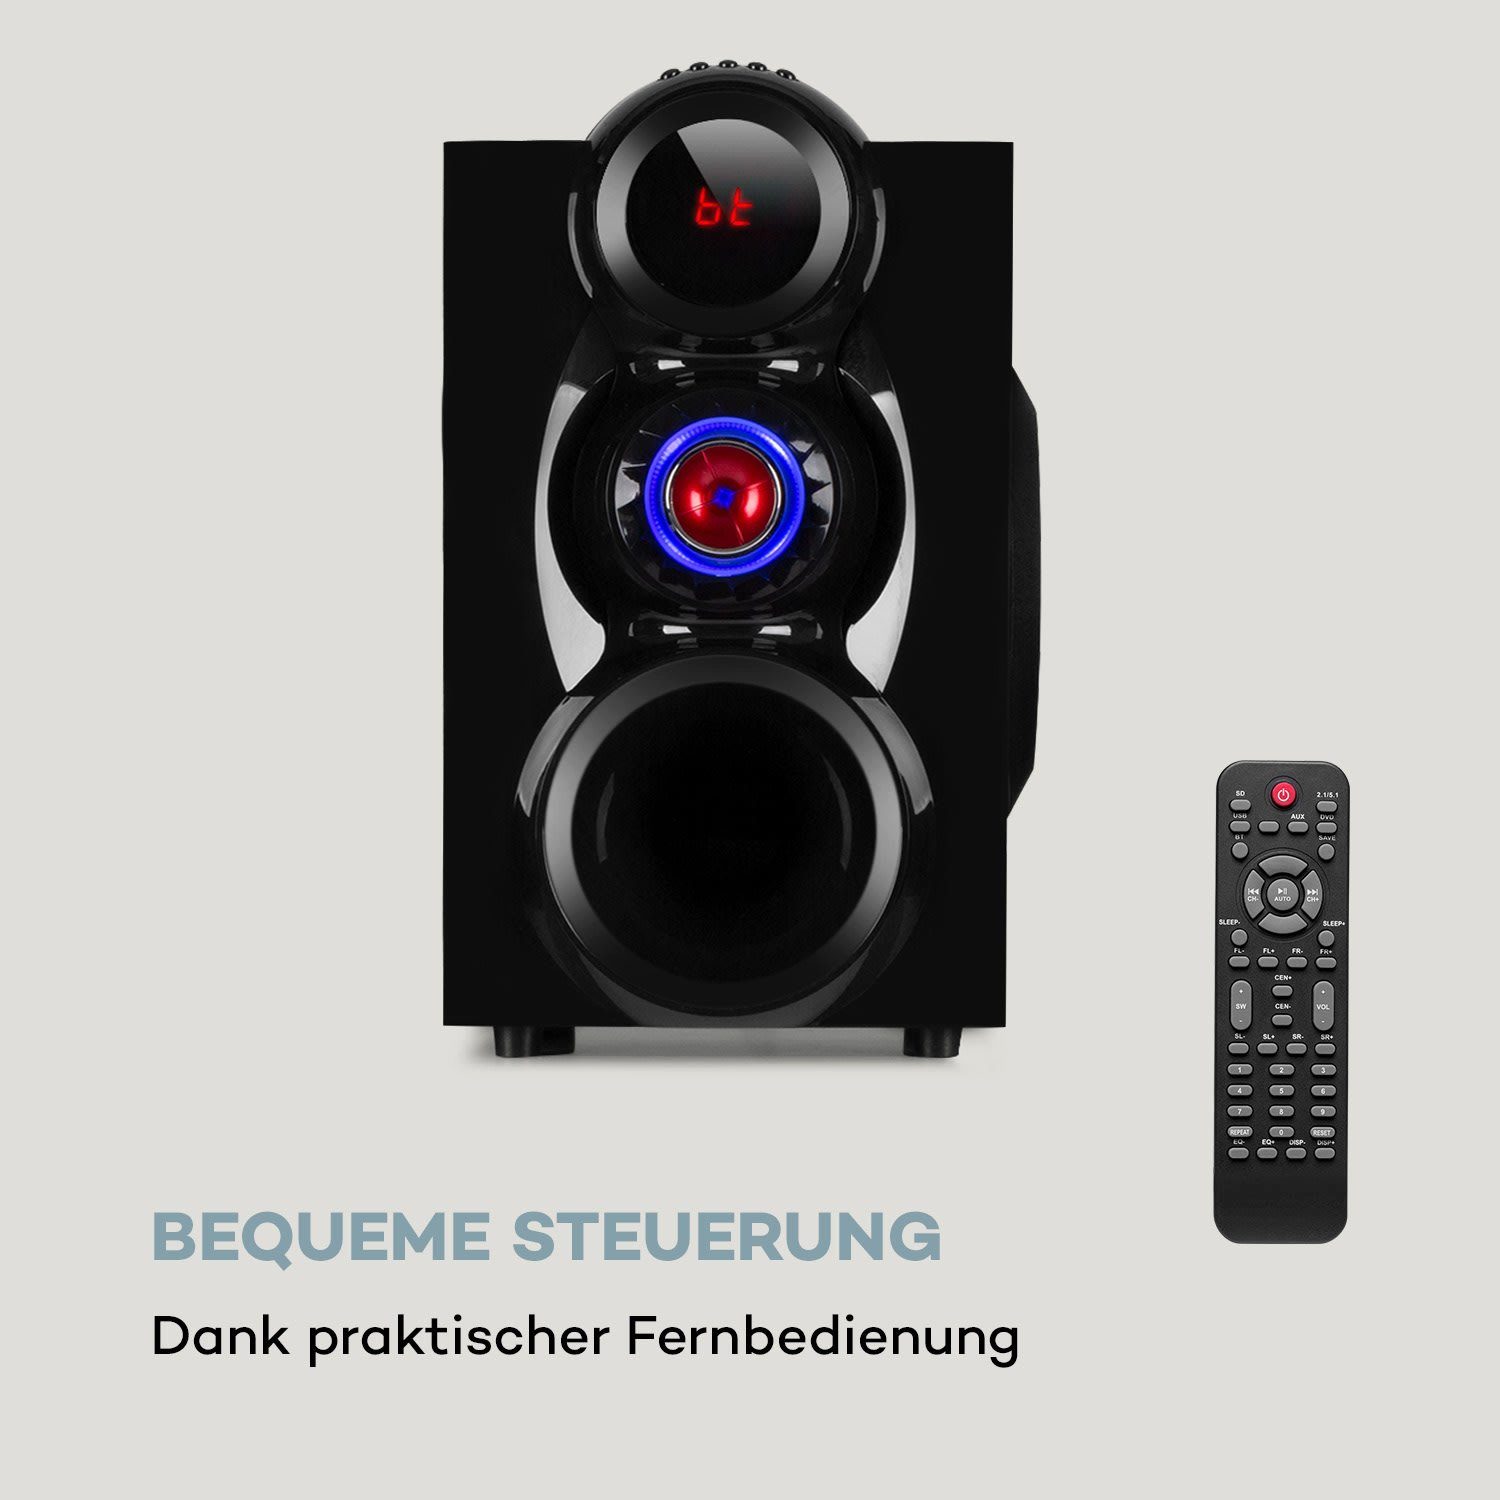 (190 X-Gaming W) Lautsprechersystem Auna